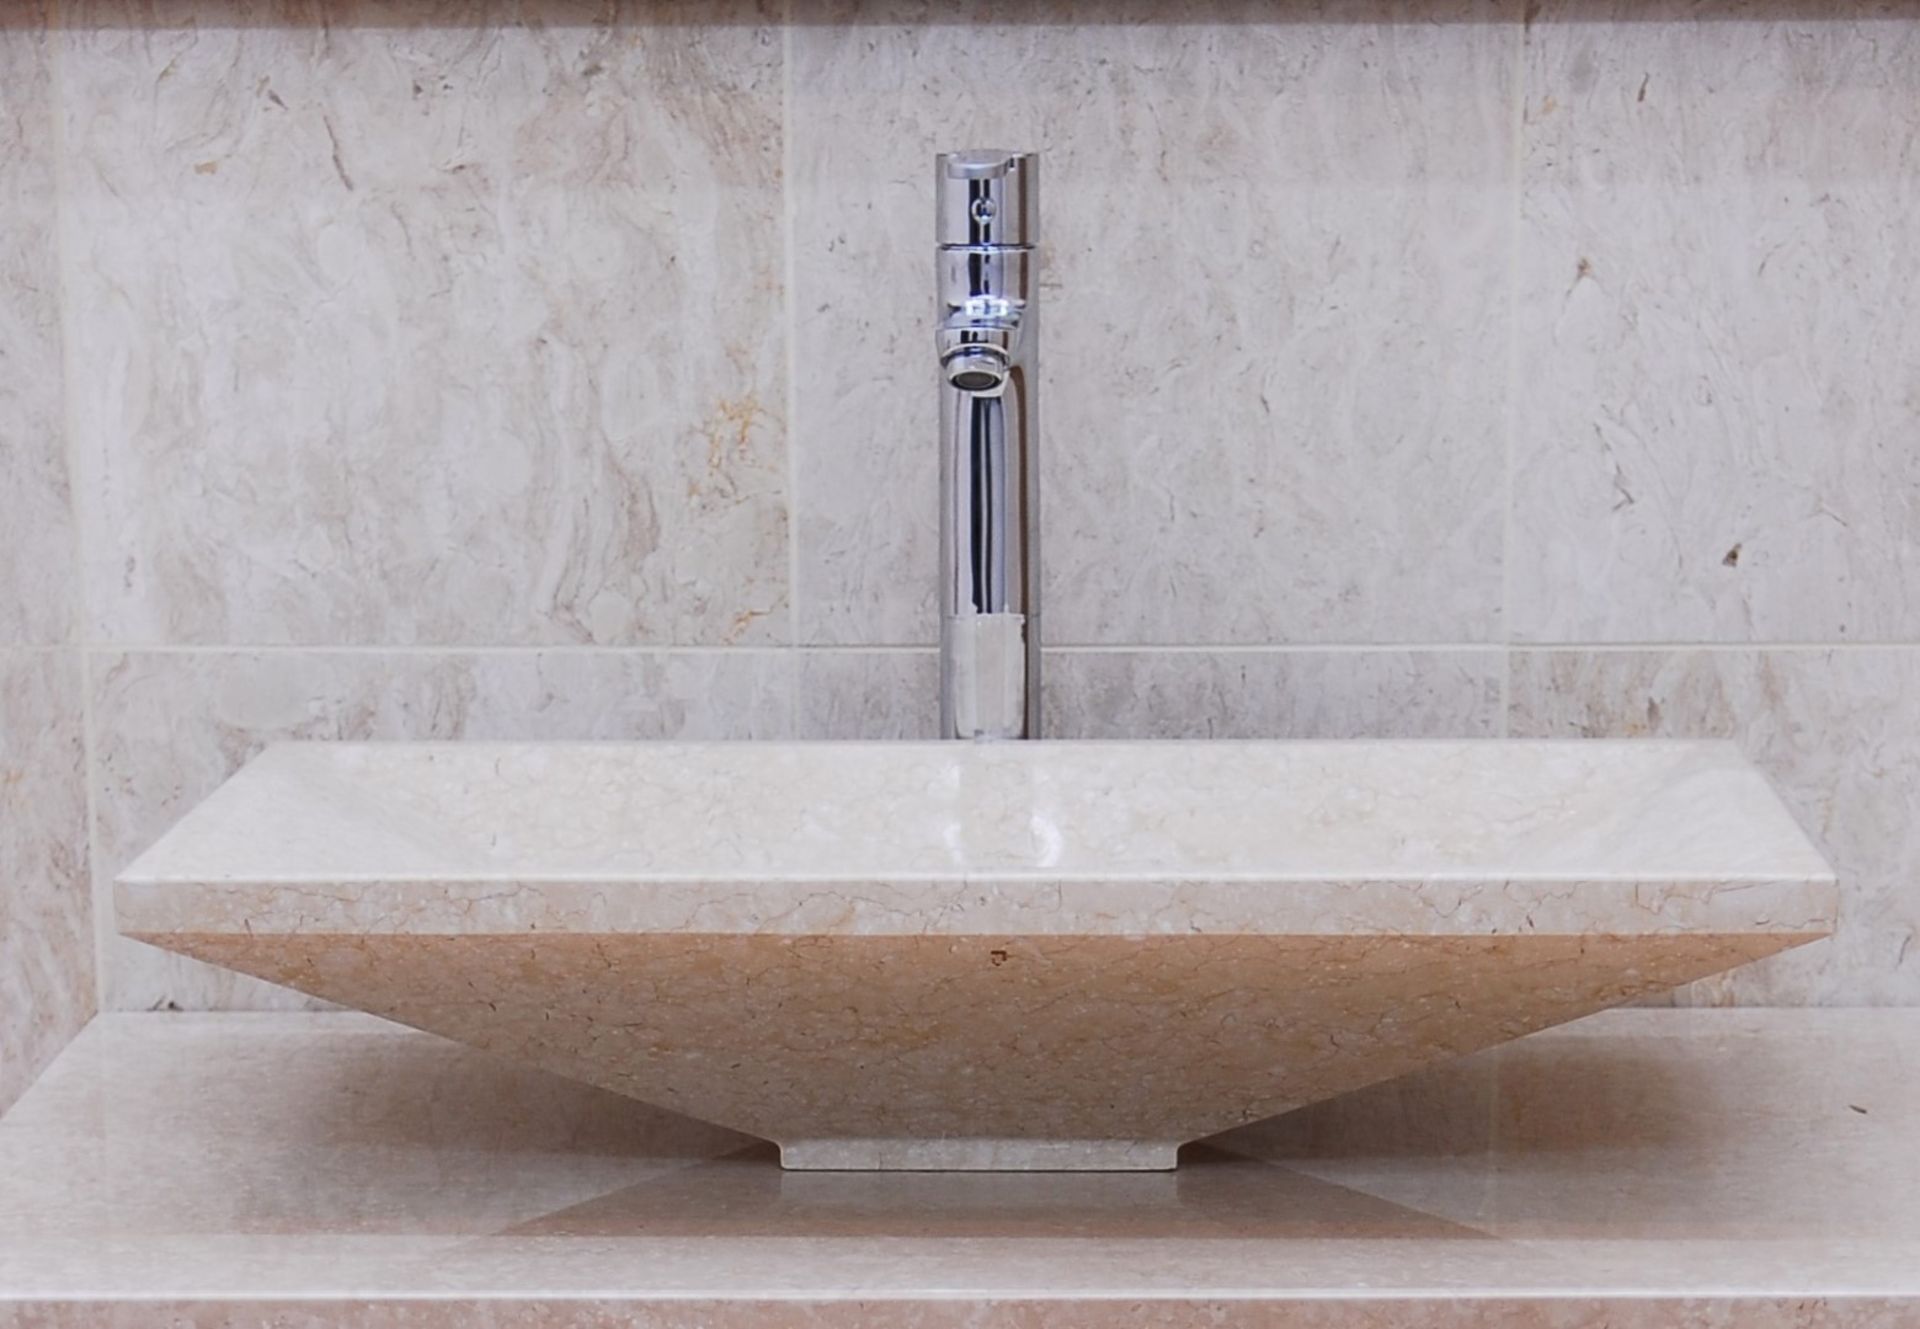 1 x Stonearth 'Karo' Solid Galala Marble Stone Countertop Sink Basin - New Boxed Stock